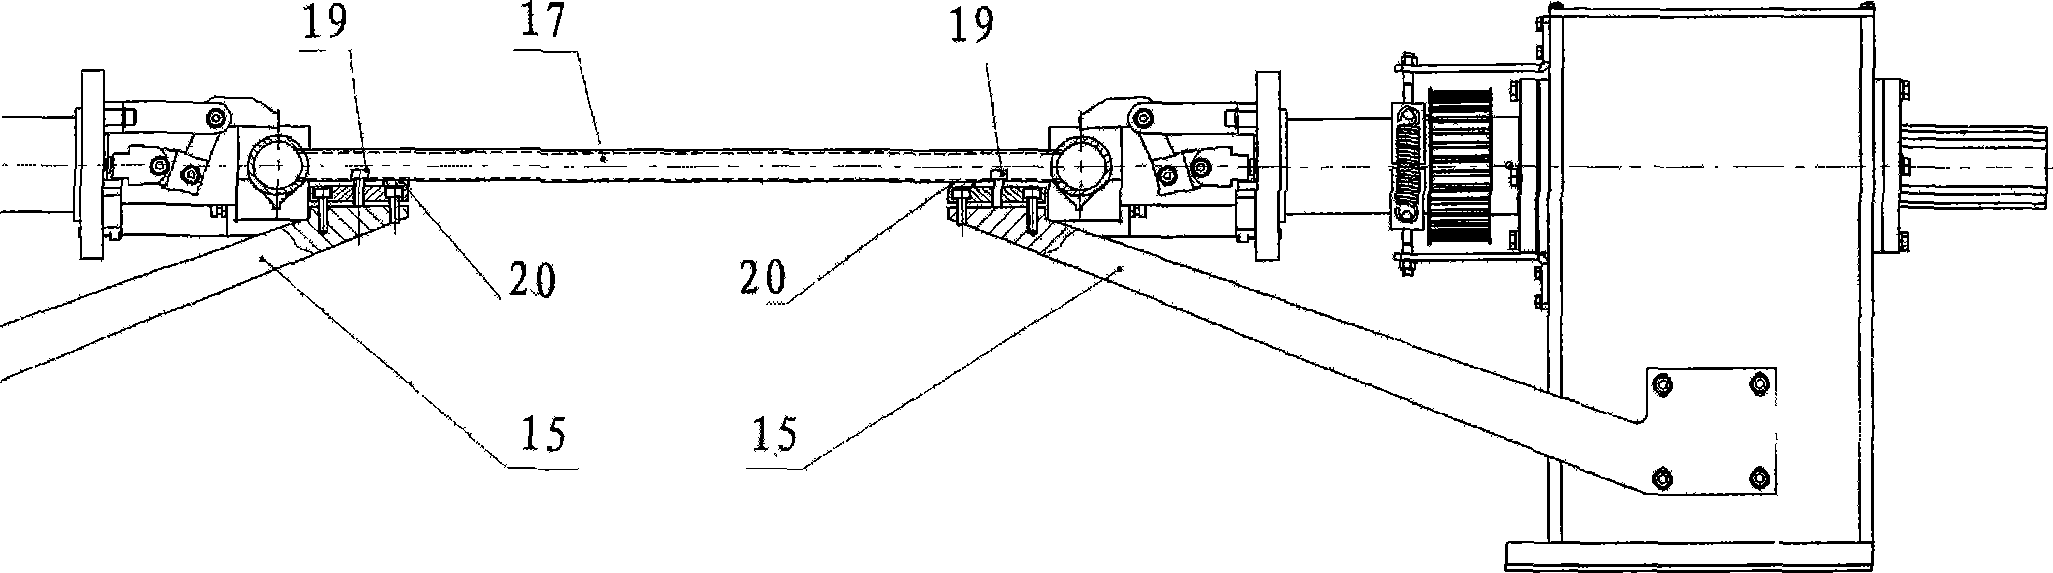 An intersecting line circular seam welding device